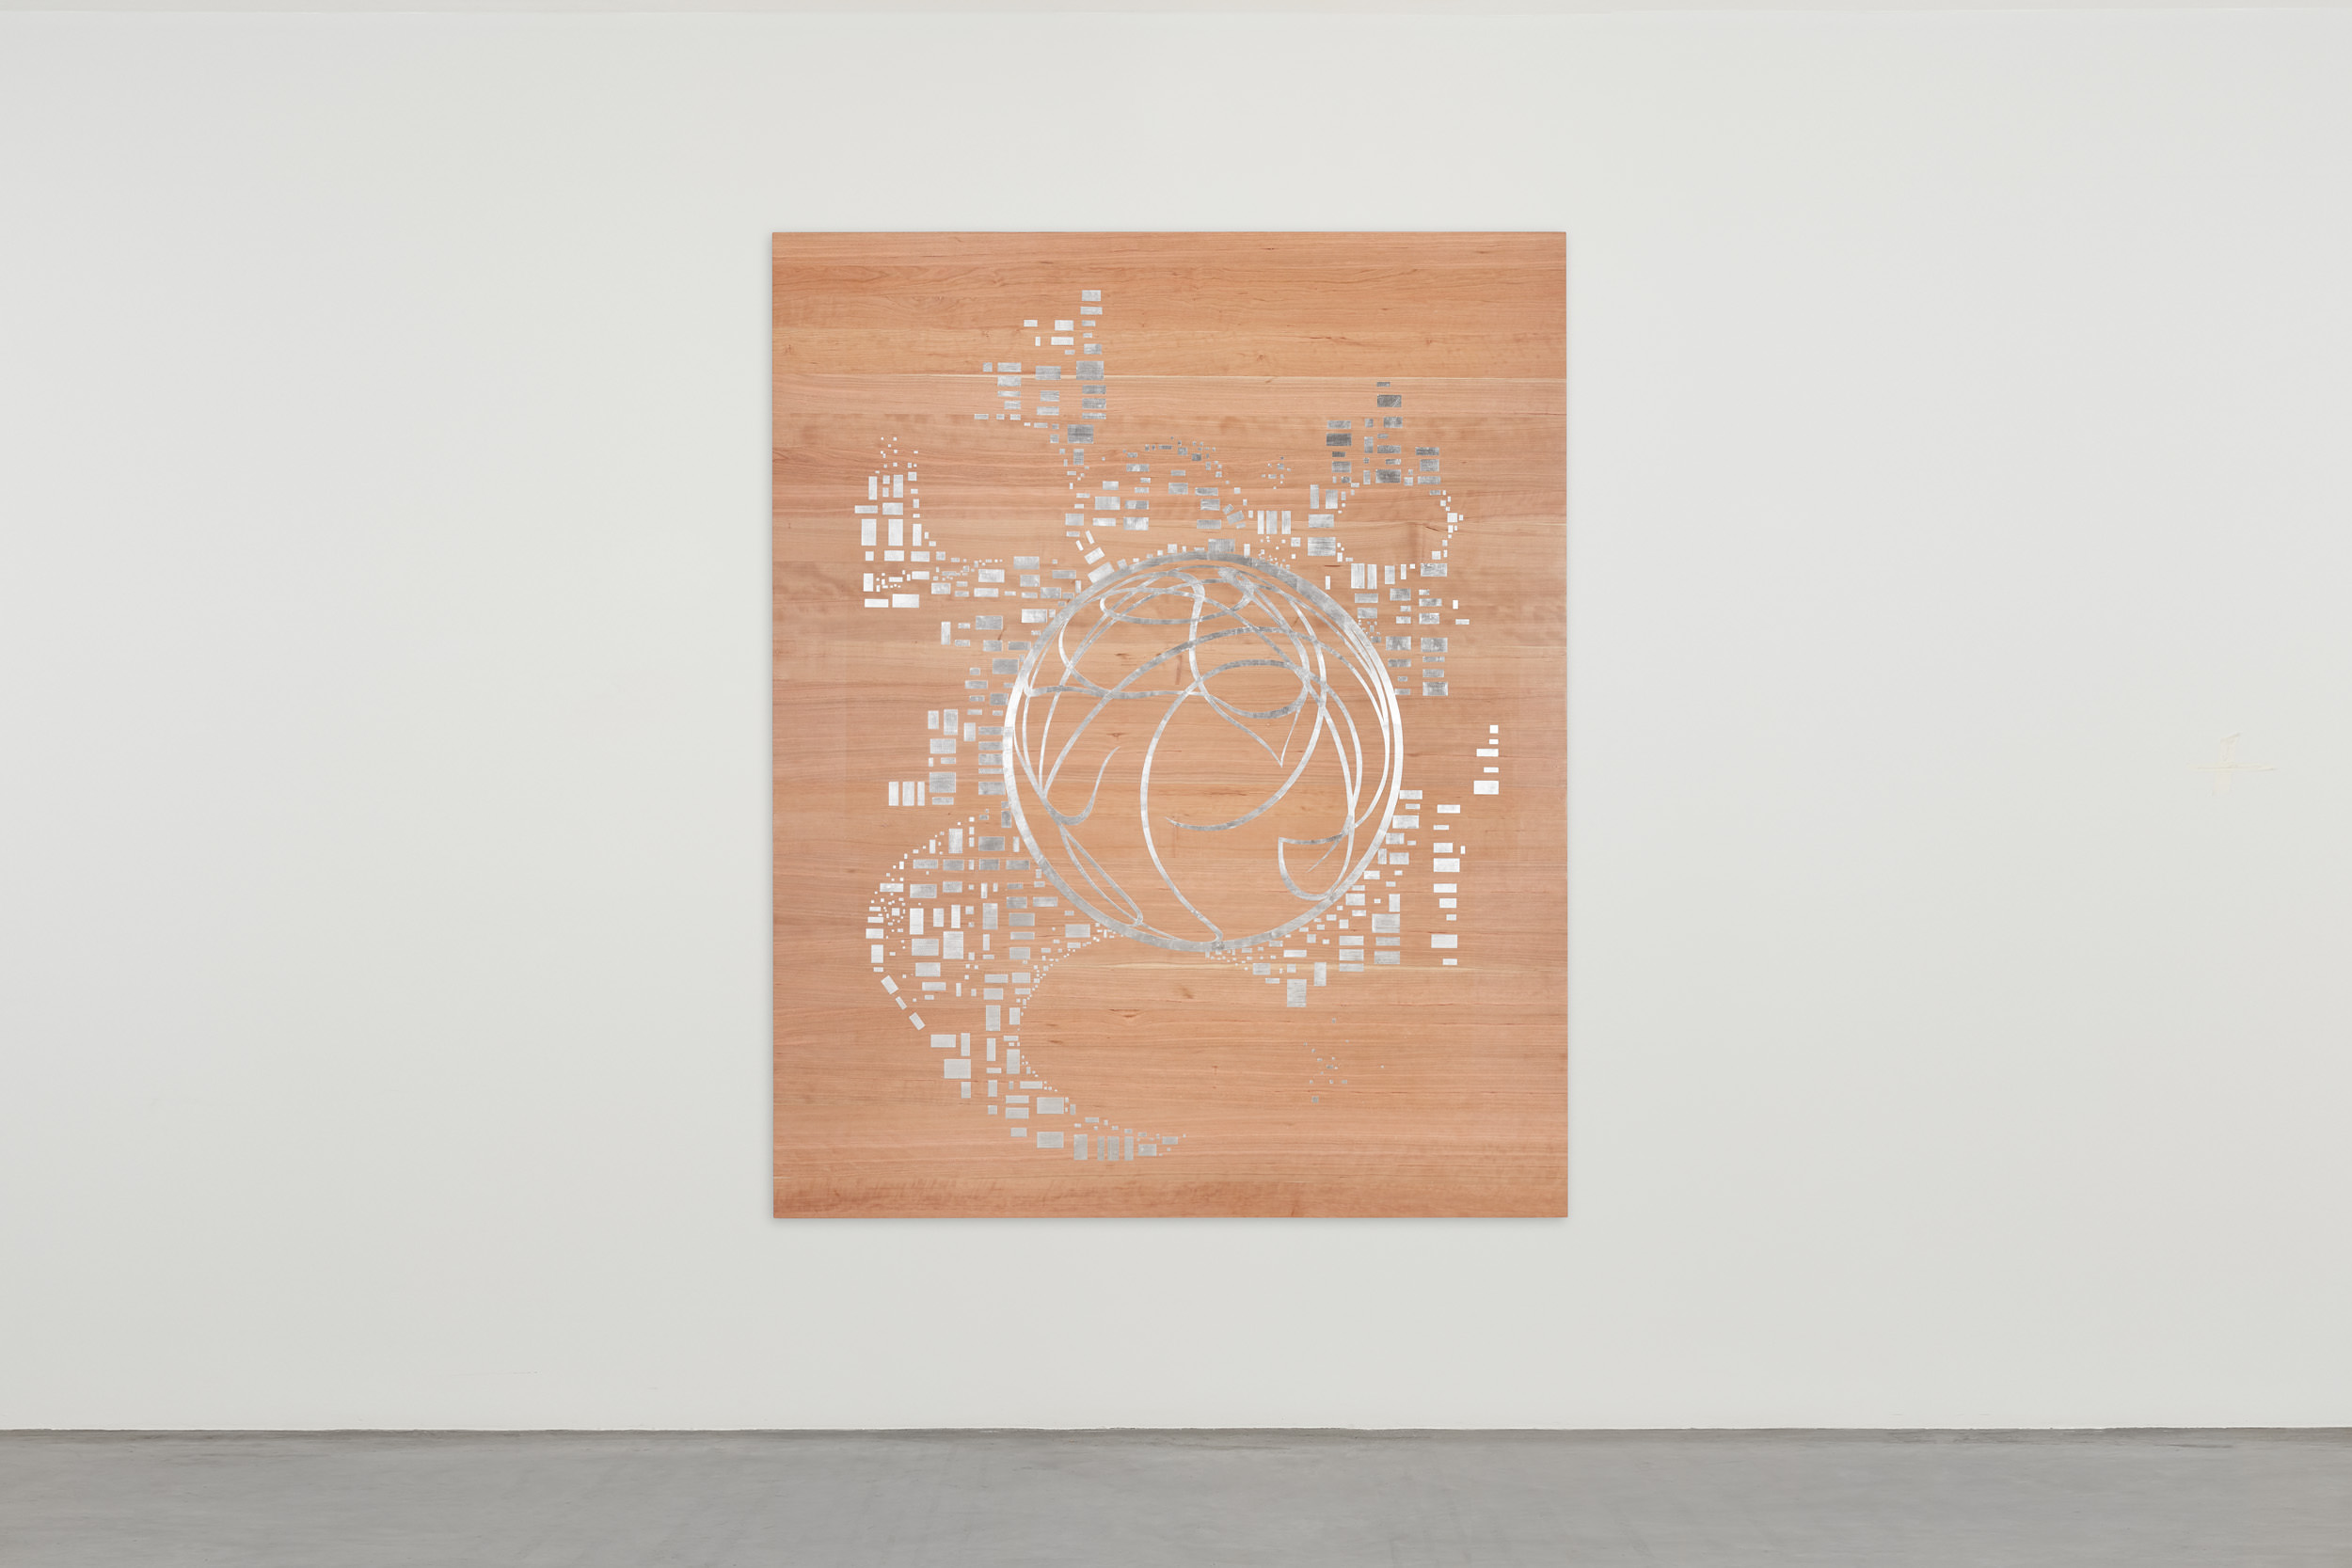 Domenico Bianchi, Untitled, 2018, wood and palladium, 204 x 164 cm, 80.3 x 64.6 in